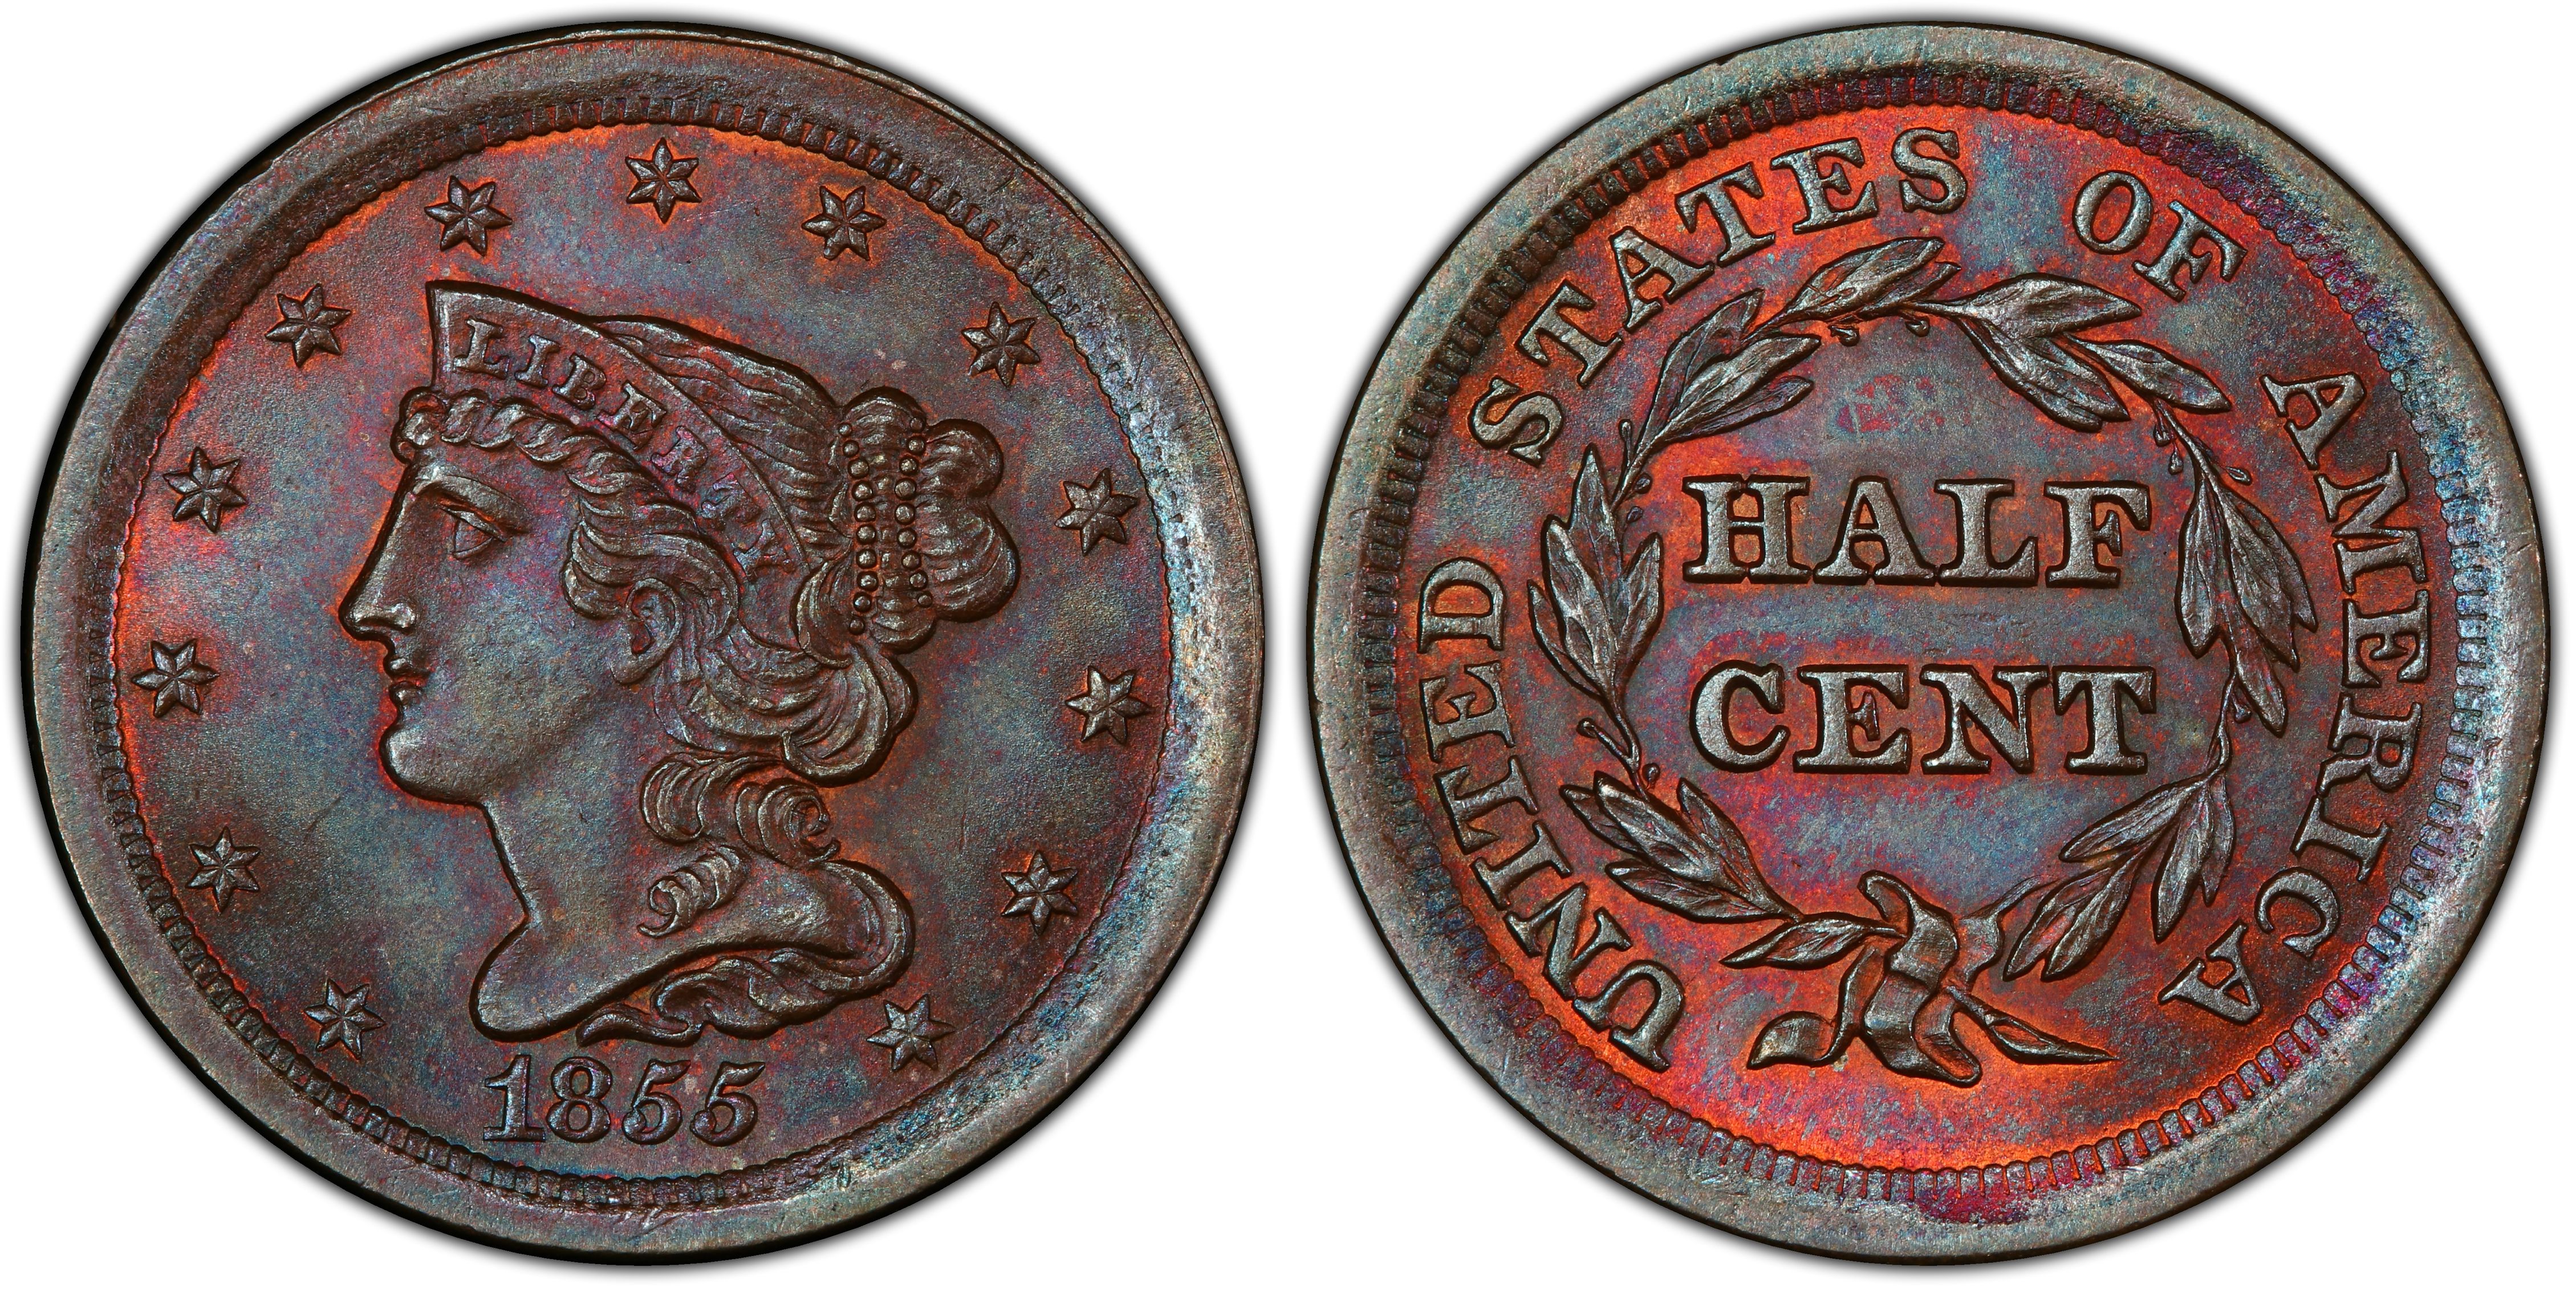 1825 1/2C, BN (Regular Strike) Classic Head Half Cent - PCGS CoinFacts